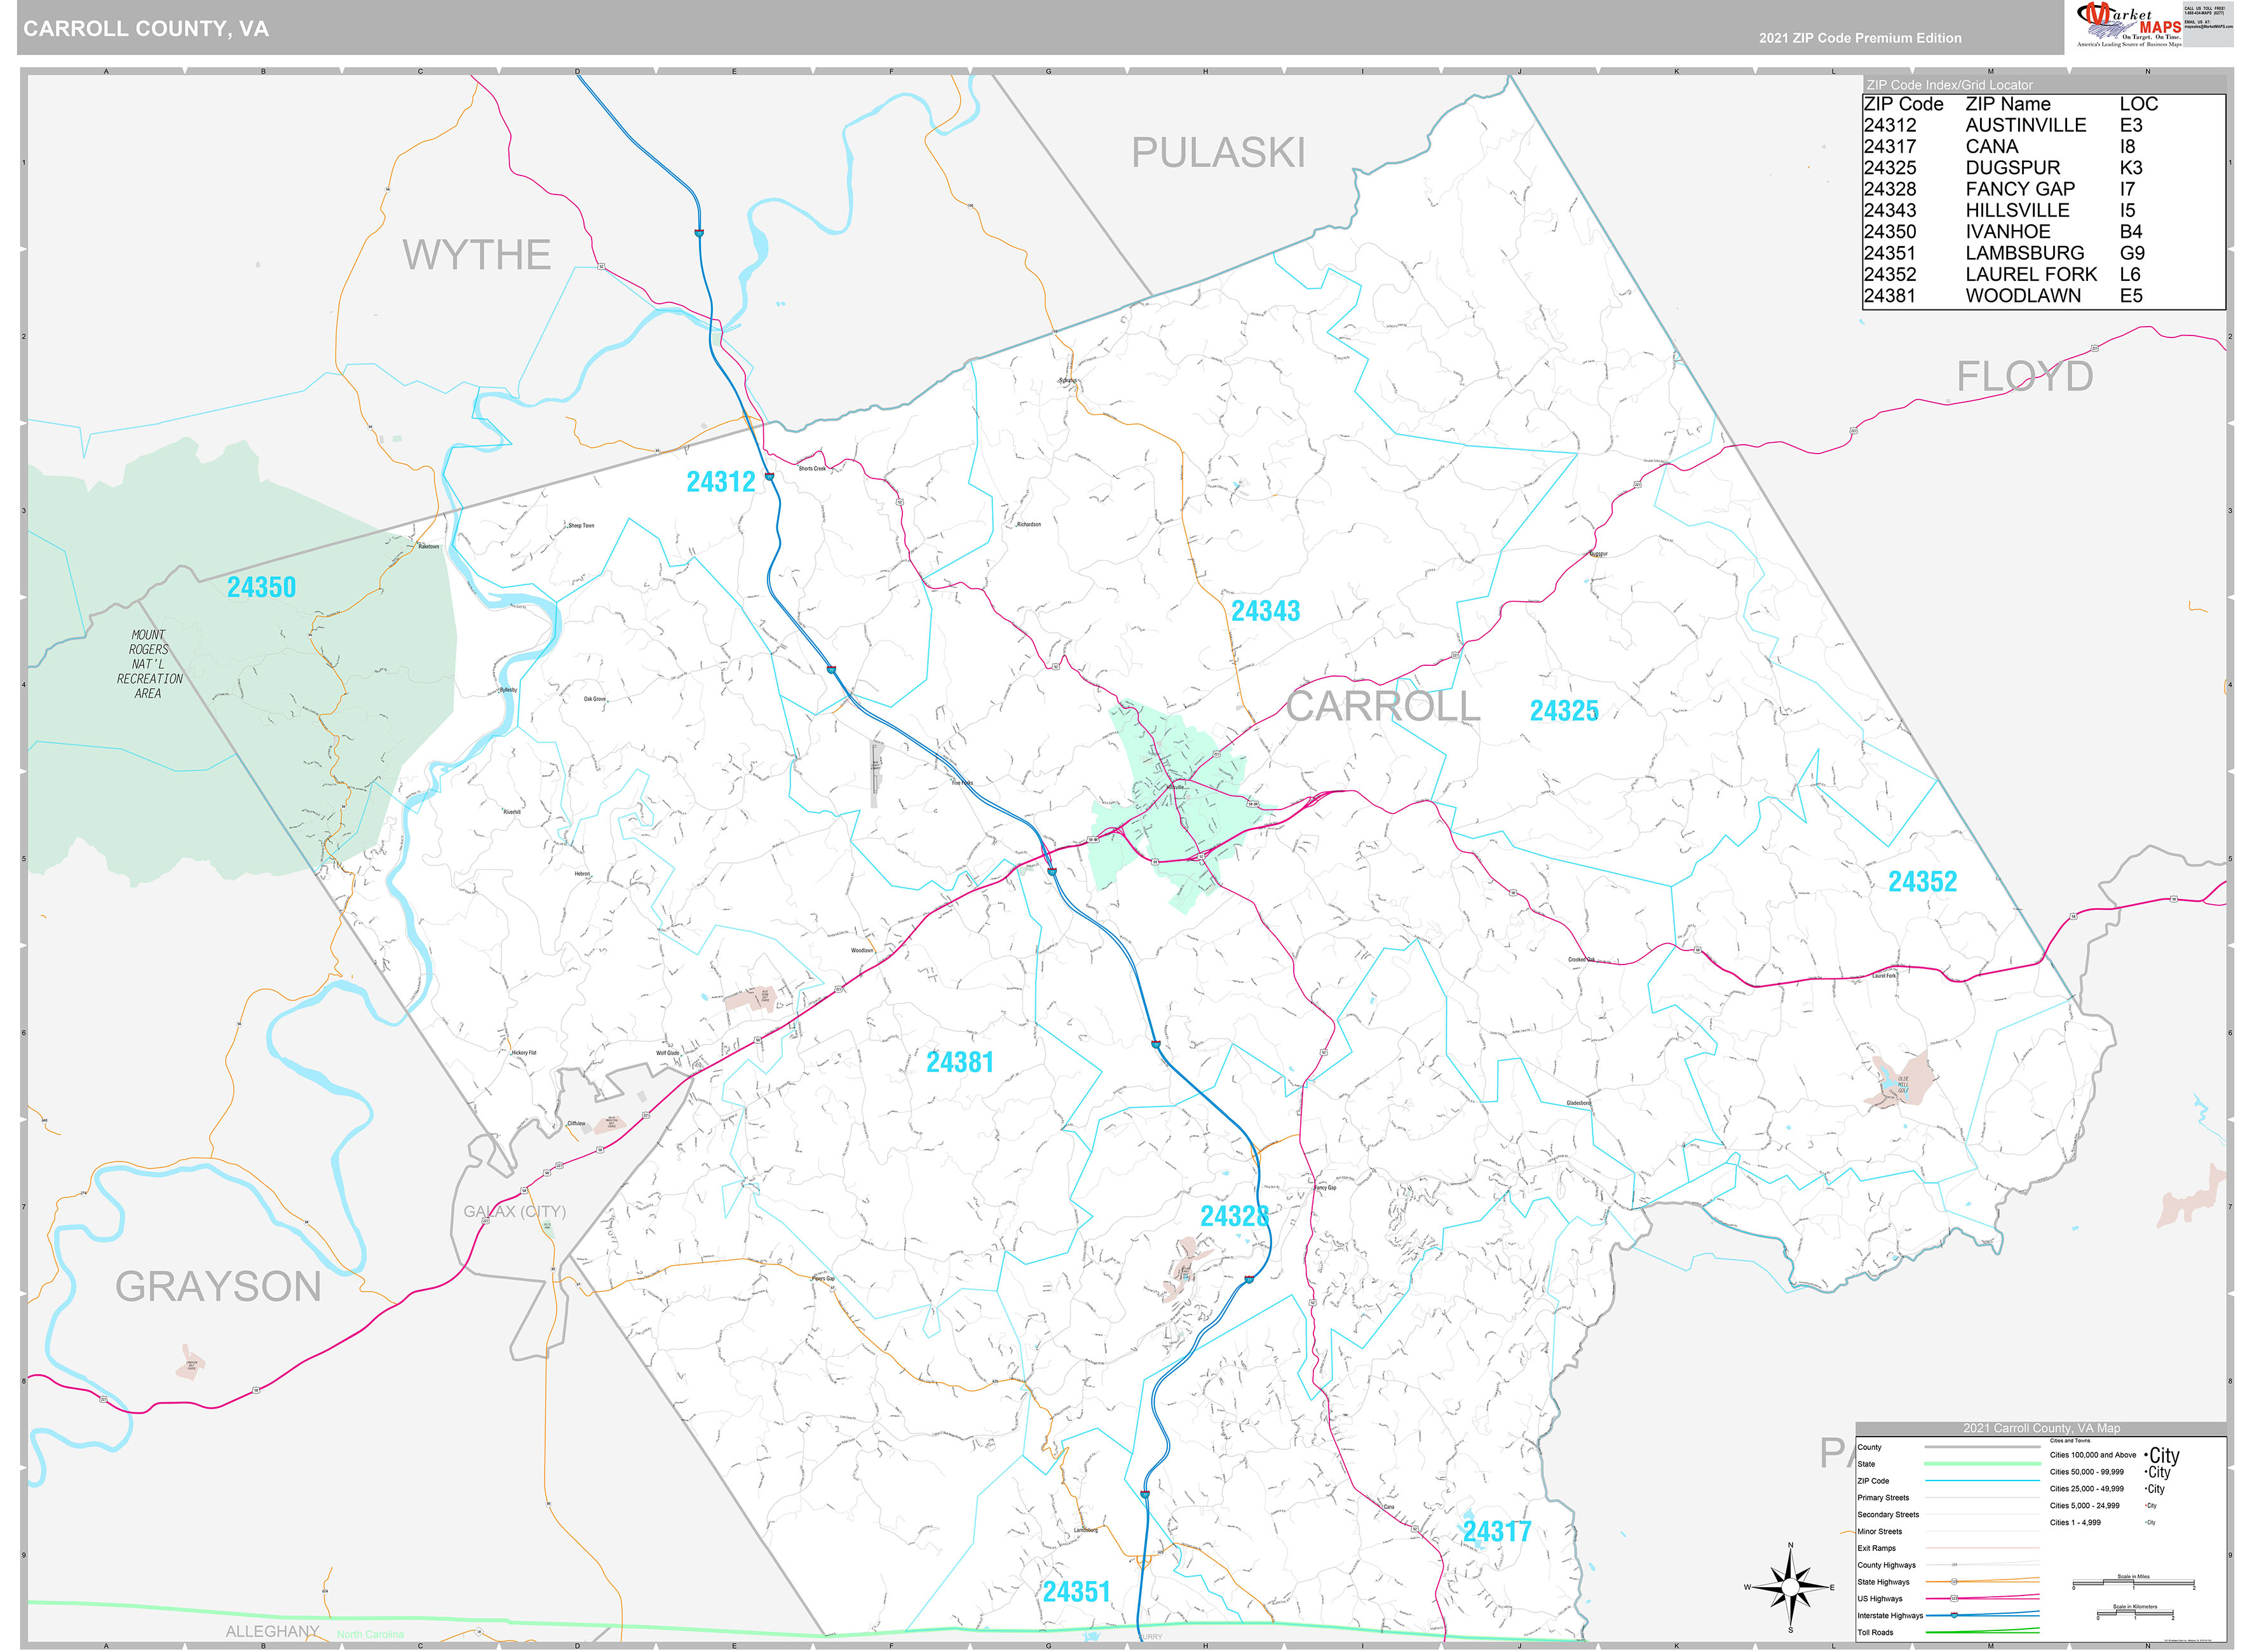 Carroll County, VA Wall Map Premium Style by MarketMAPS - MapSales